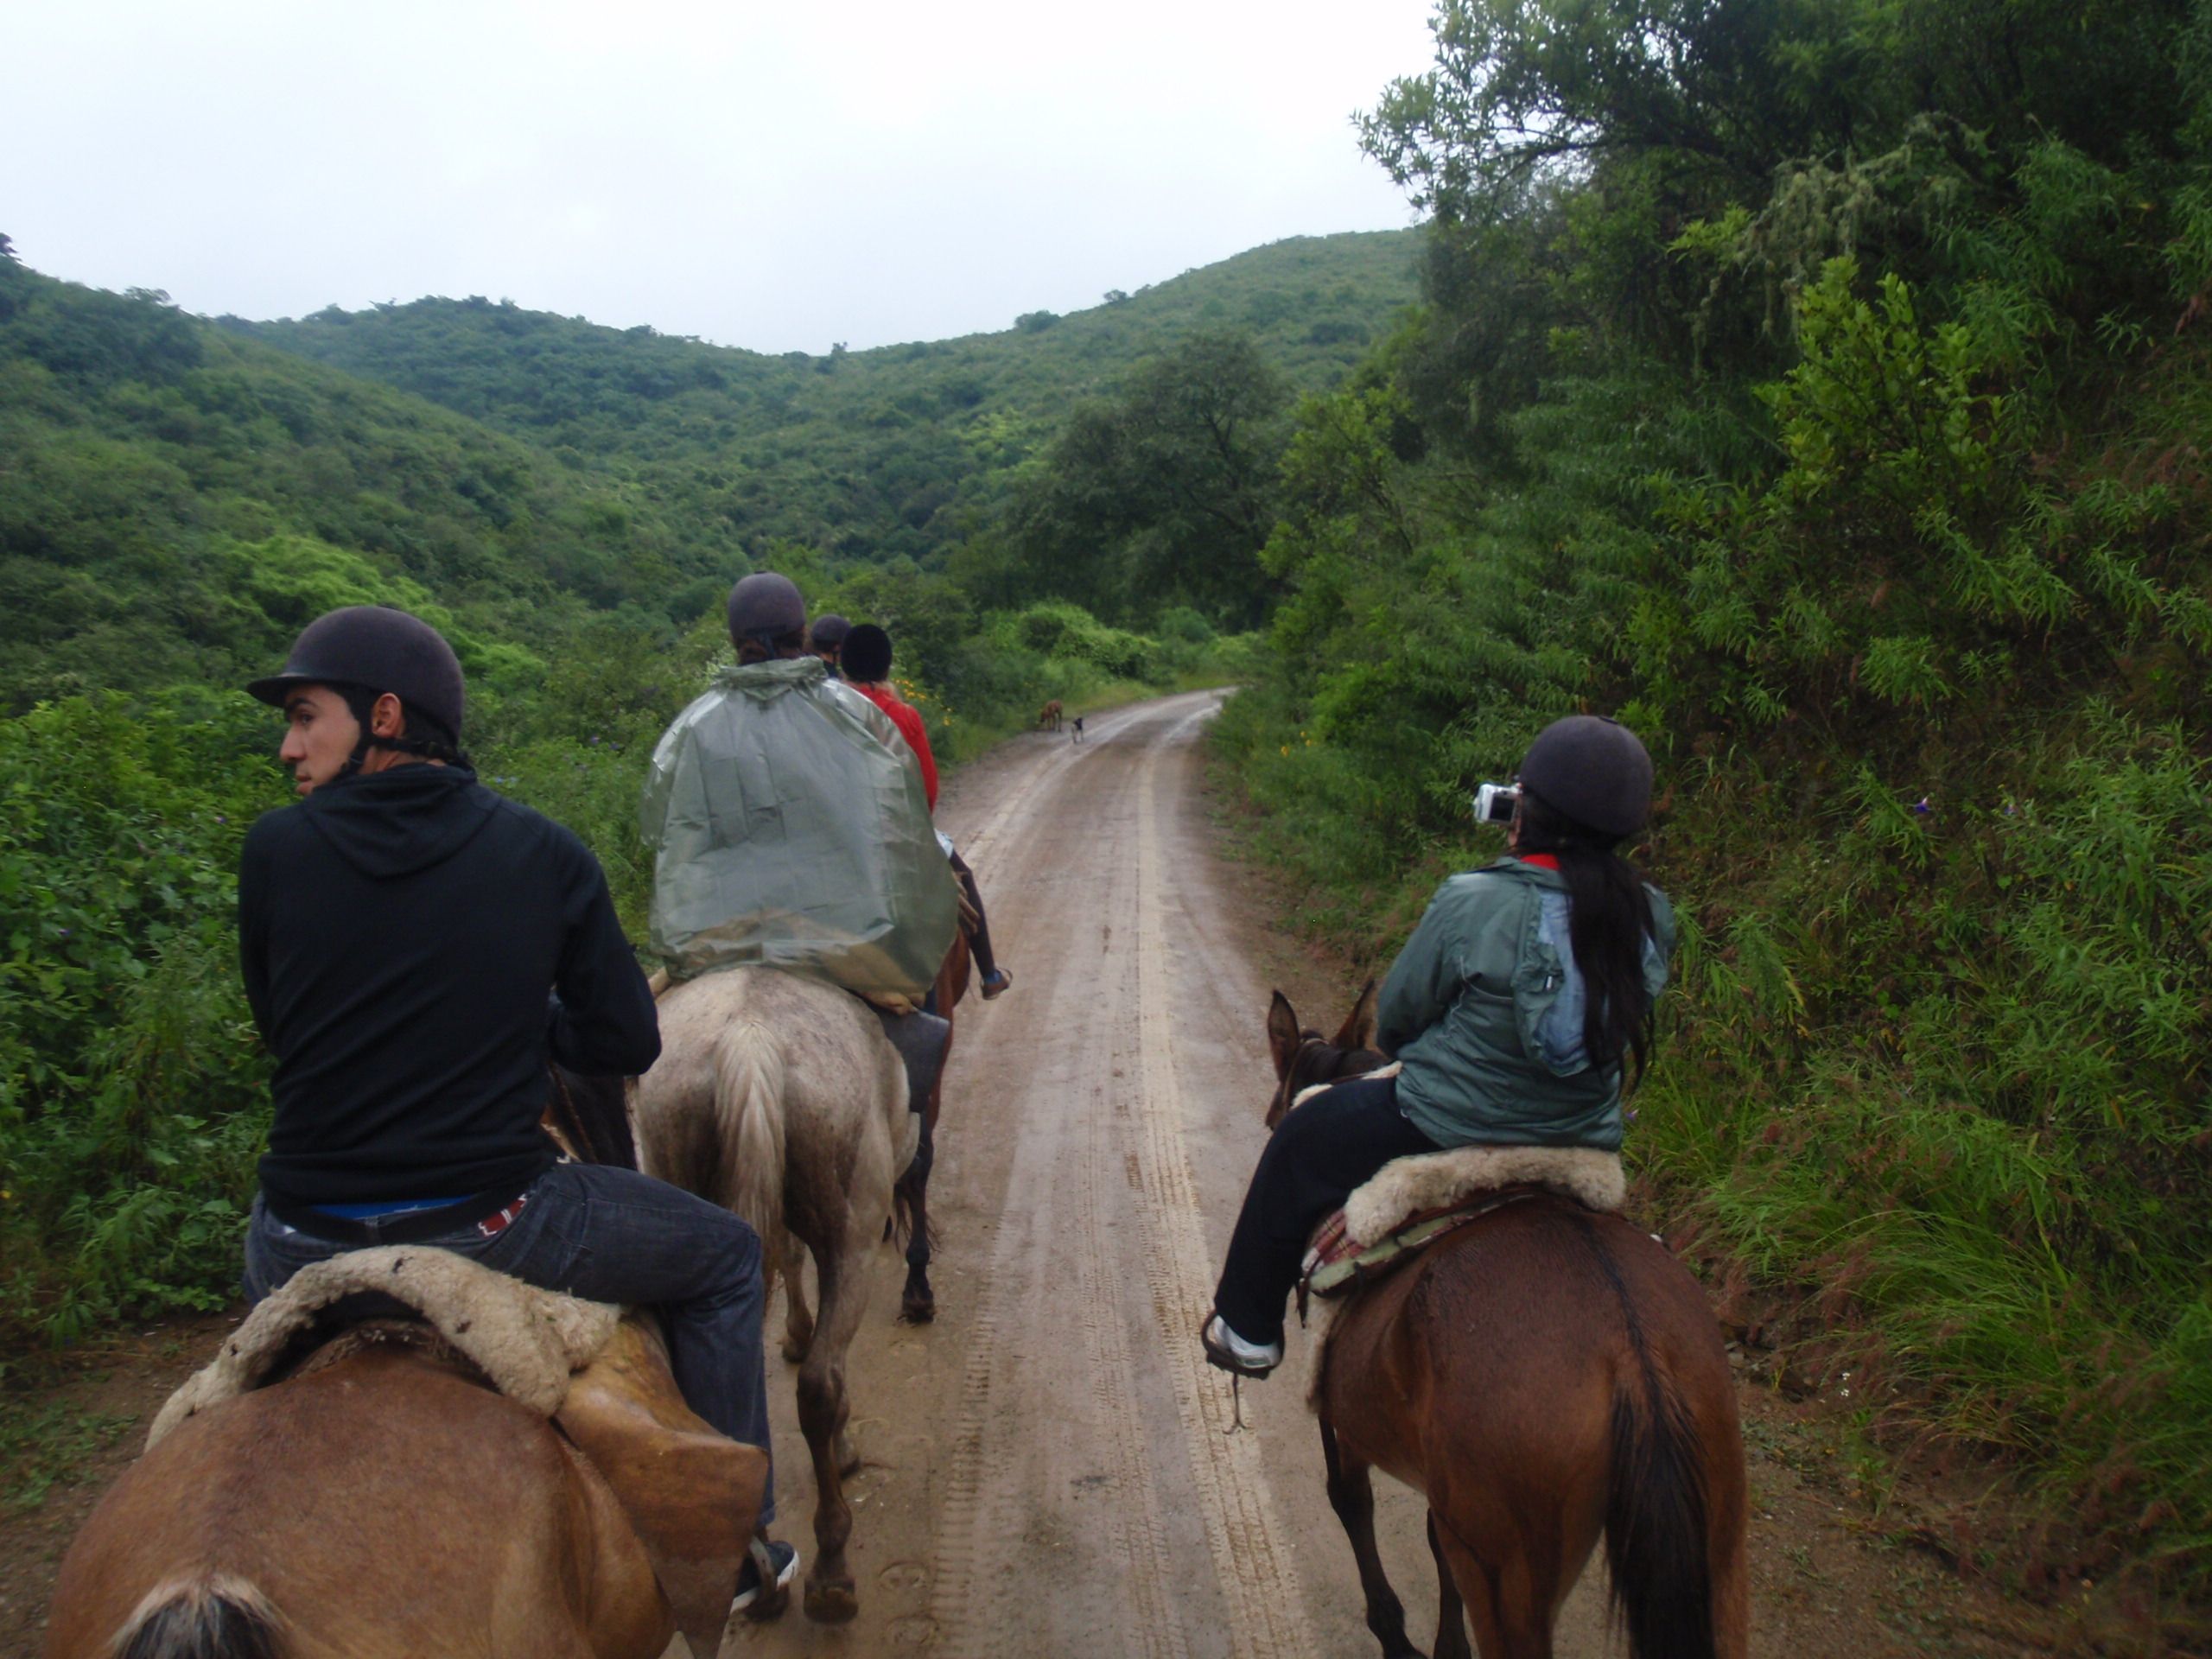 Group riding horseback through forest